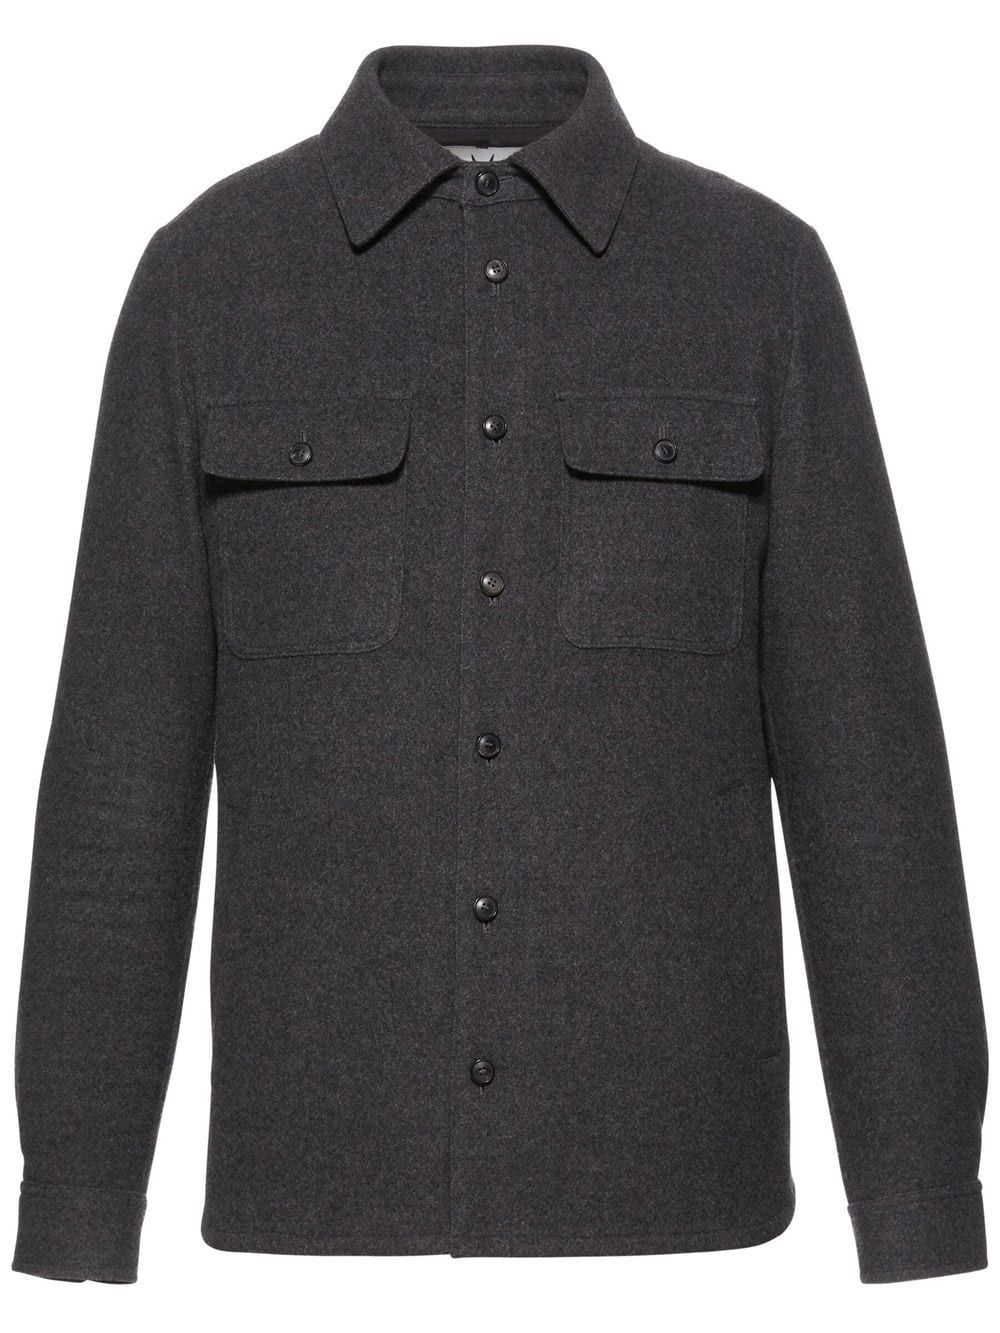 long-sleeved wool shirt jacket